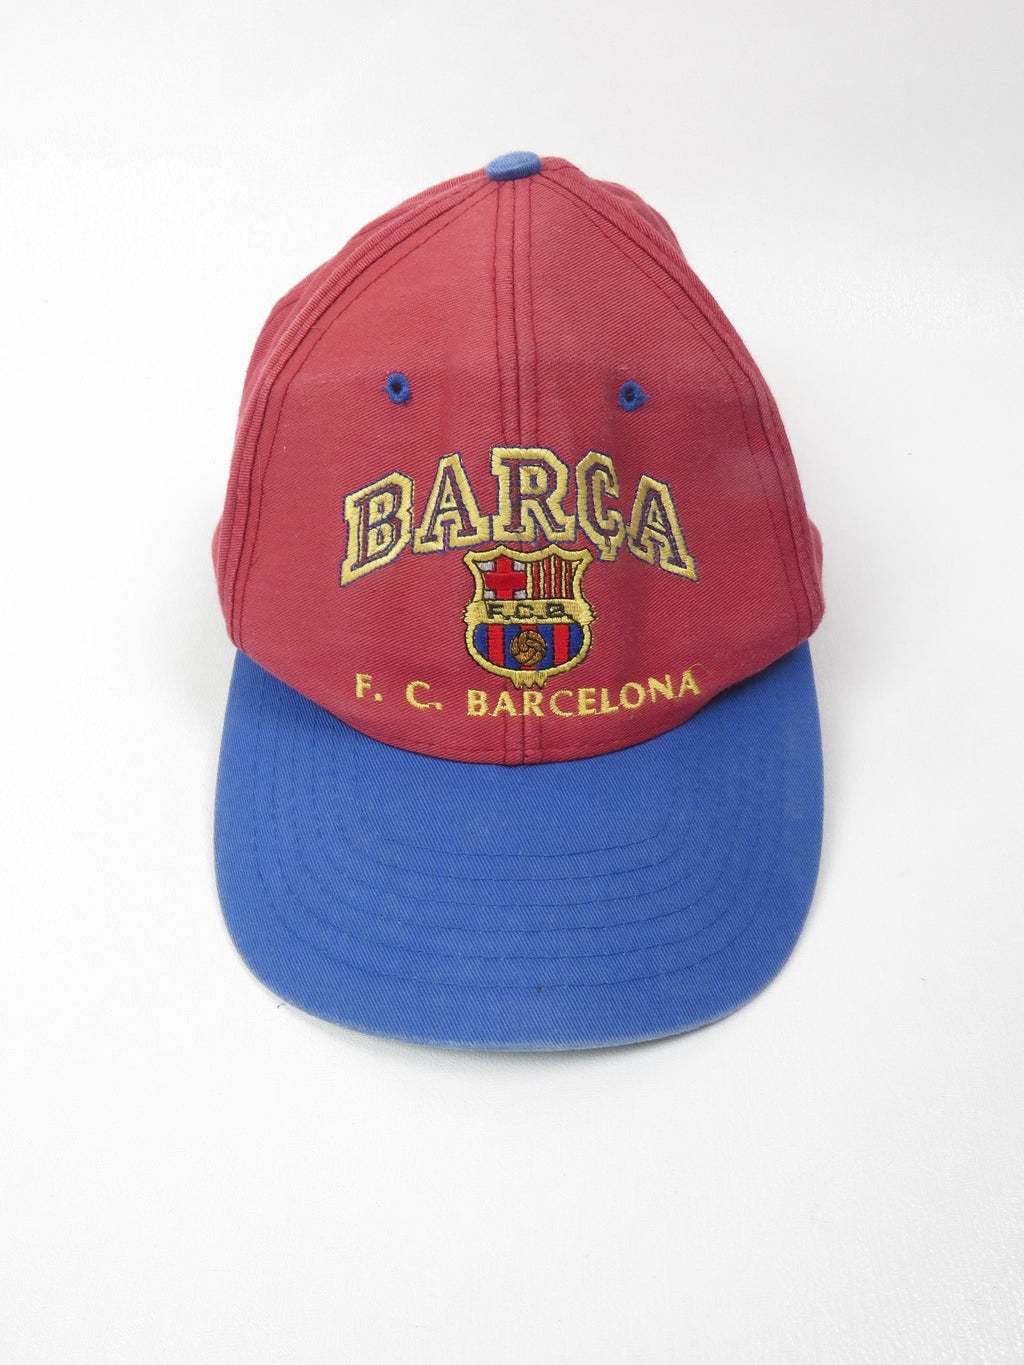 Vintage Rare Barca F.C. Barcelona Snap Back Cap S/M - The Harlequin